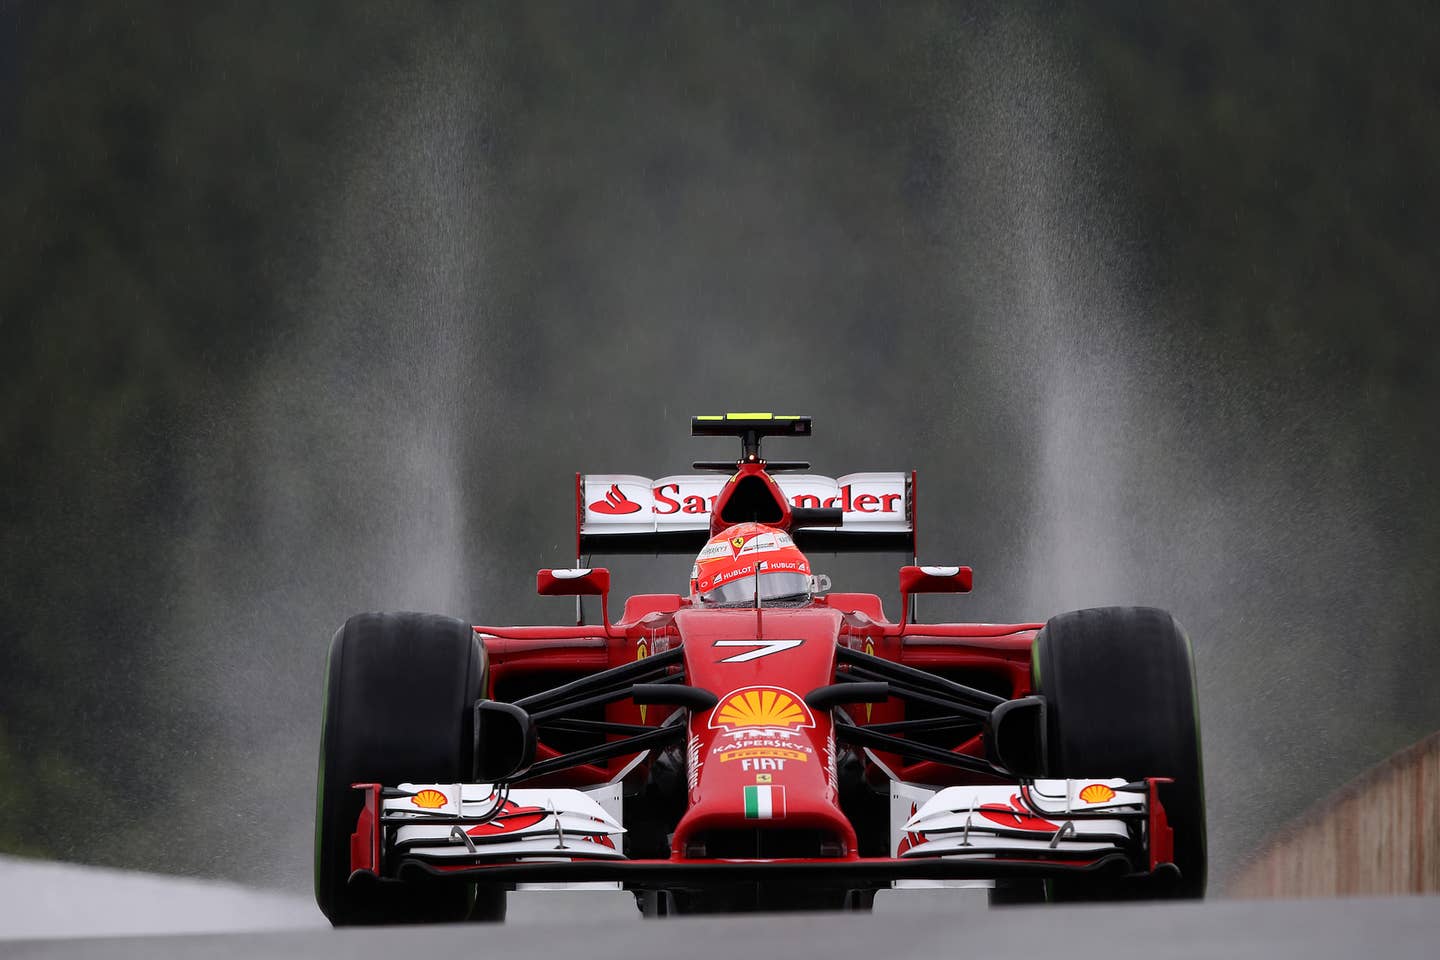 F1 Officials Suspend Racing After Scary Incident Involving Kimi Räikkönen